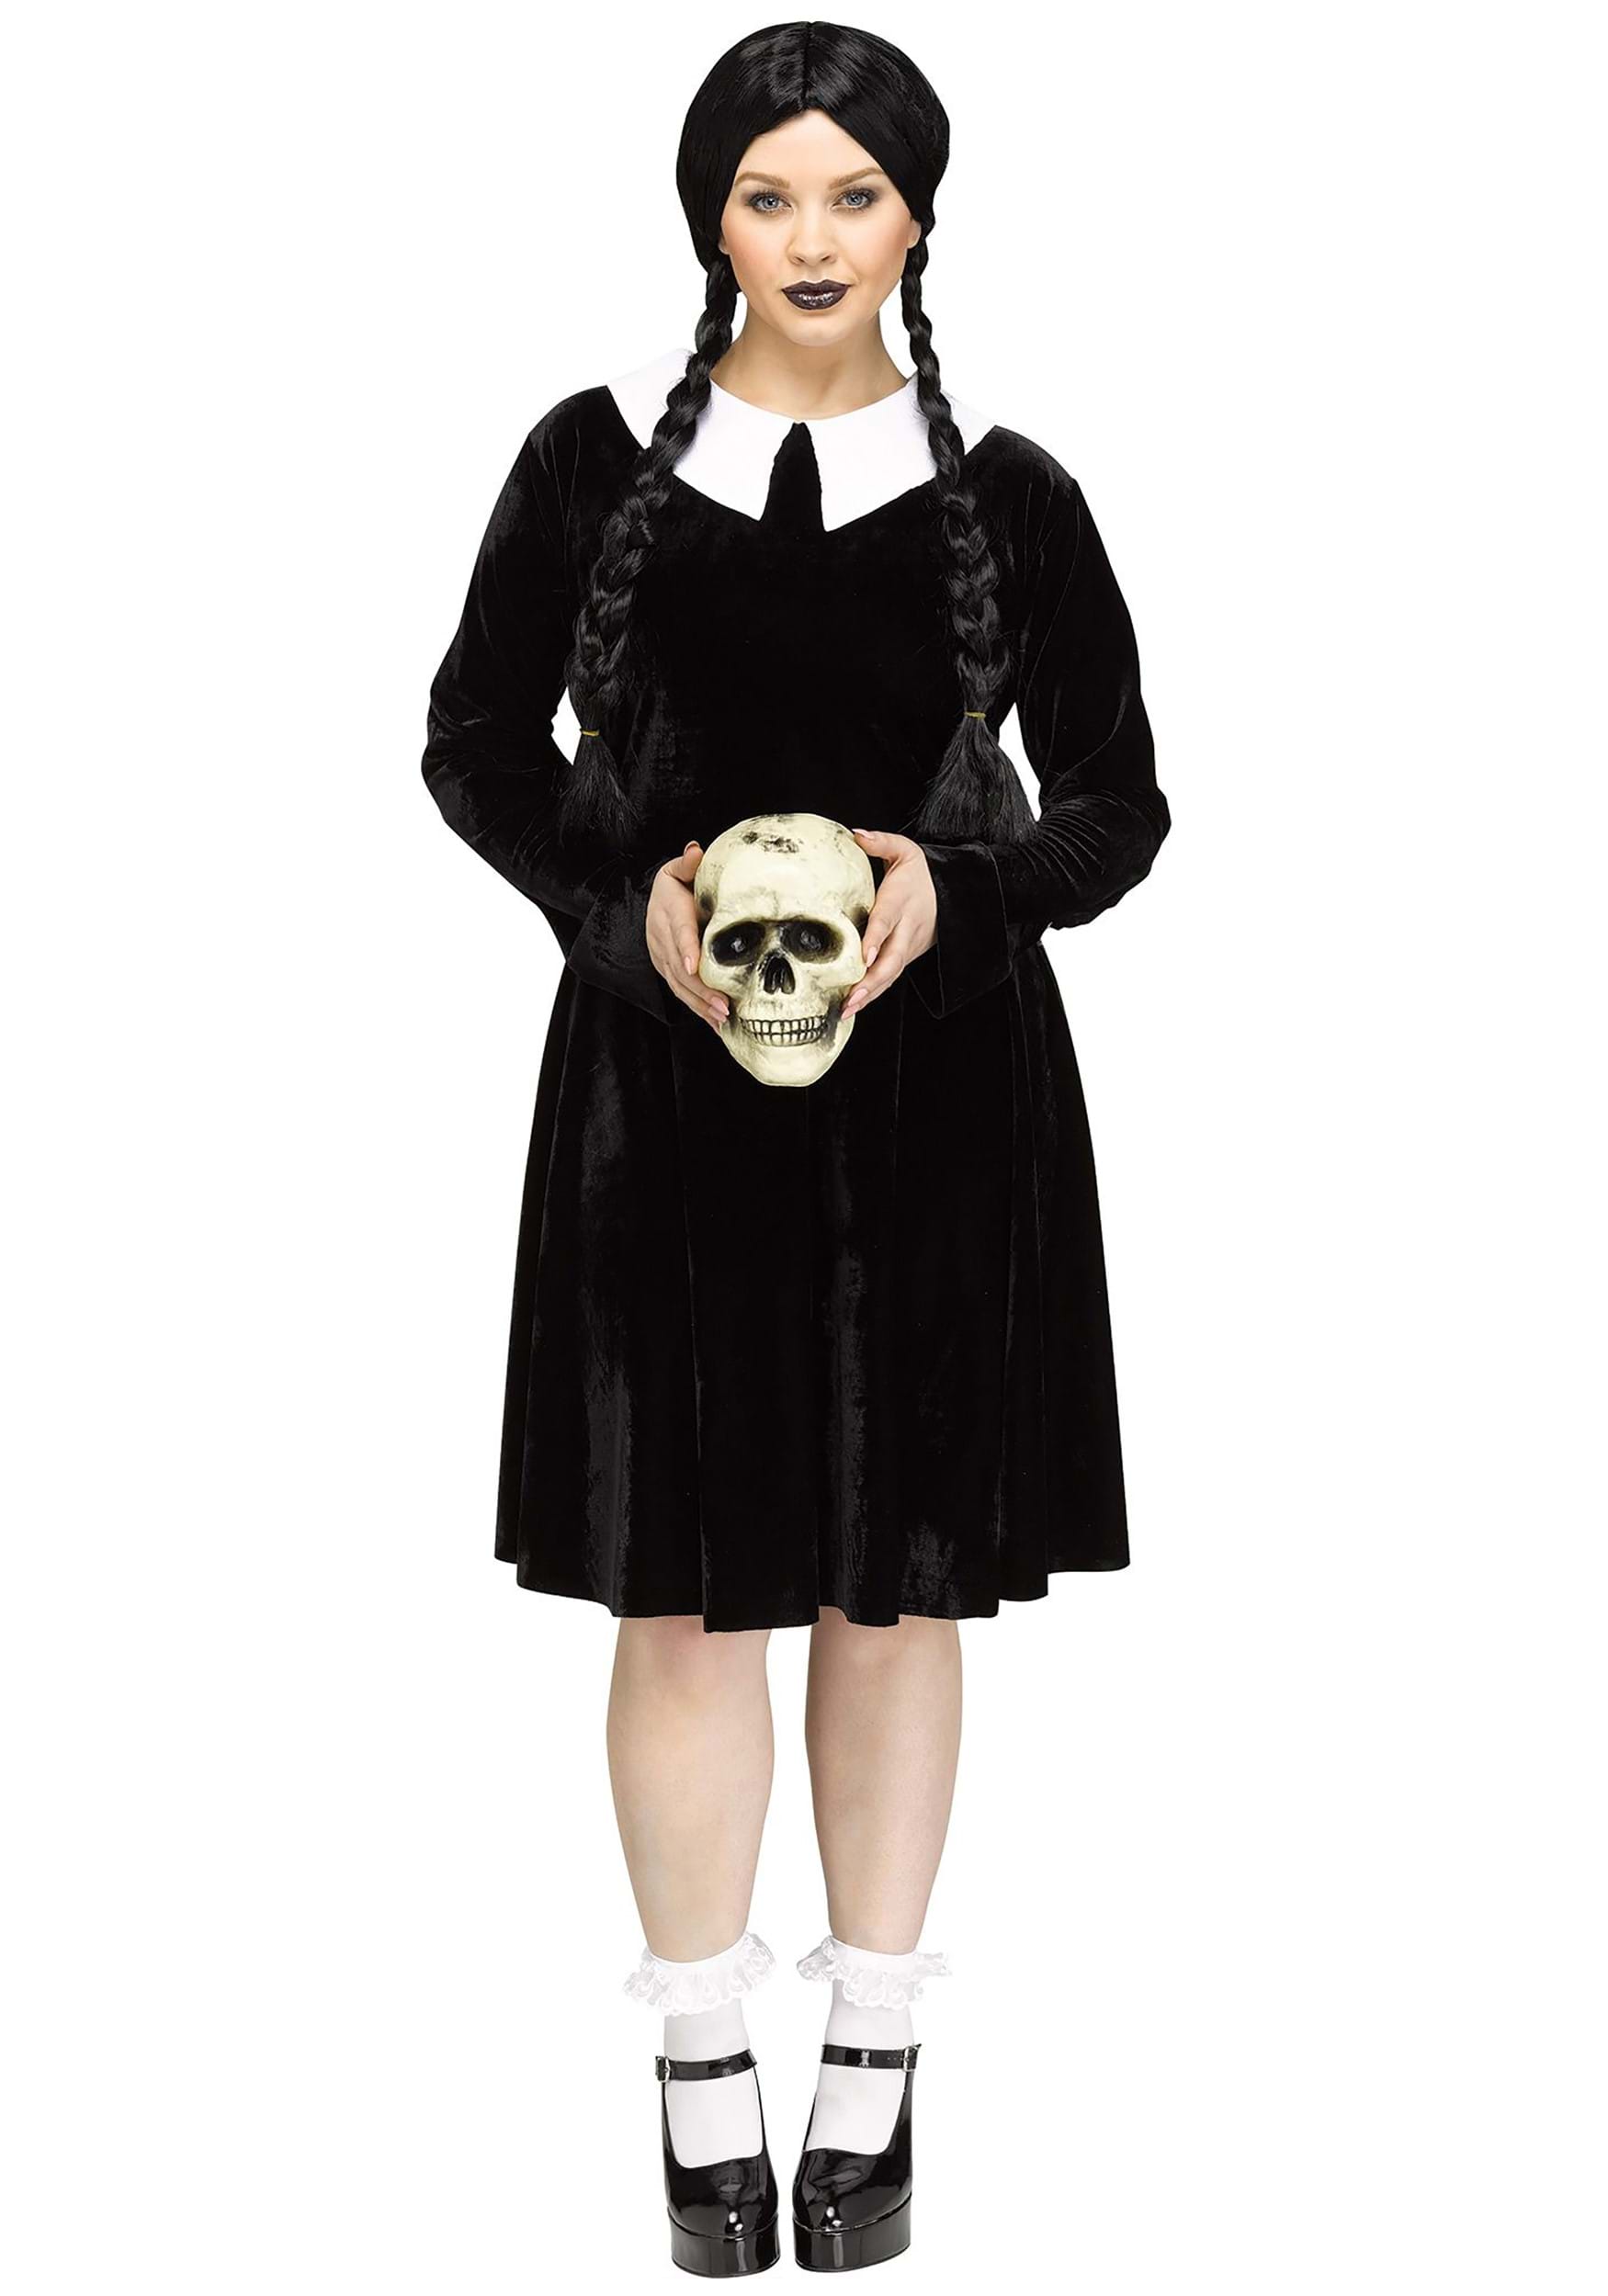 SCARY DAUGHTER BLACK PLAITS WIG Halloween Fancy Dress Wednesday Adams Wigs UK 